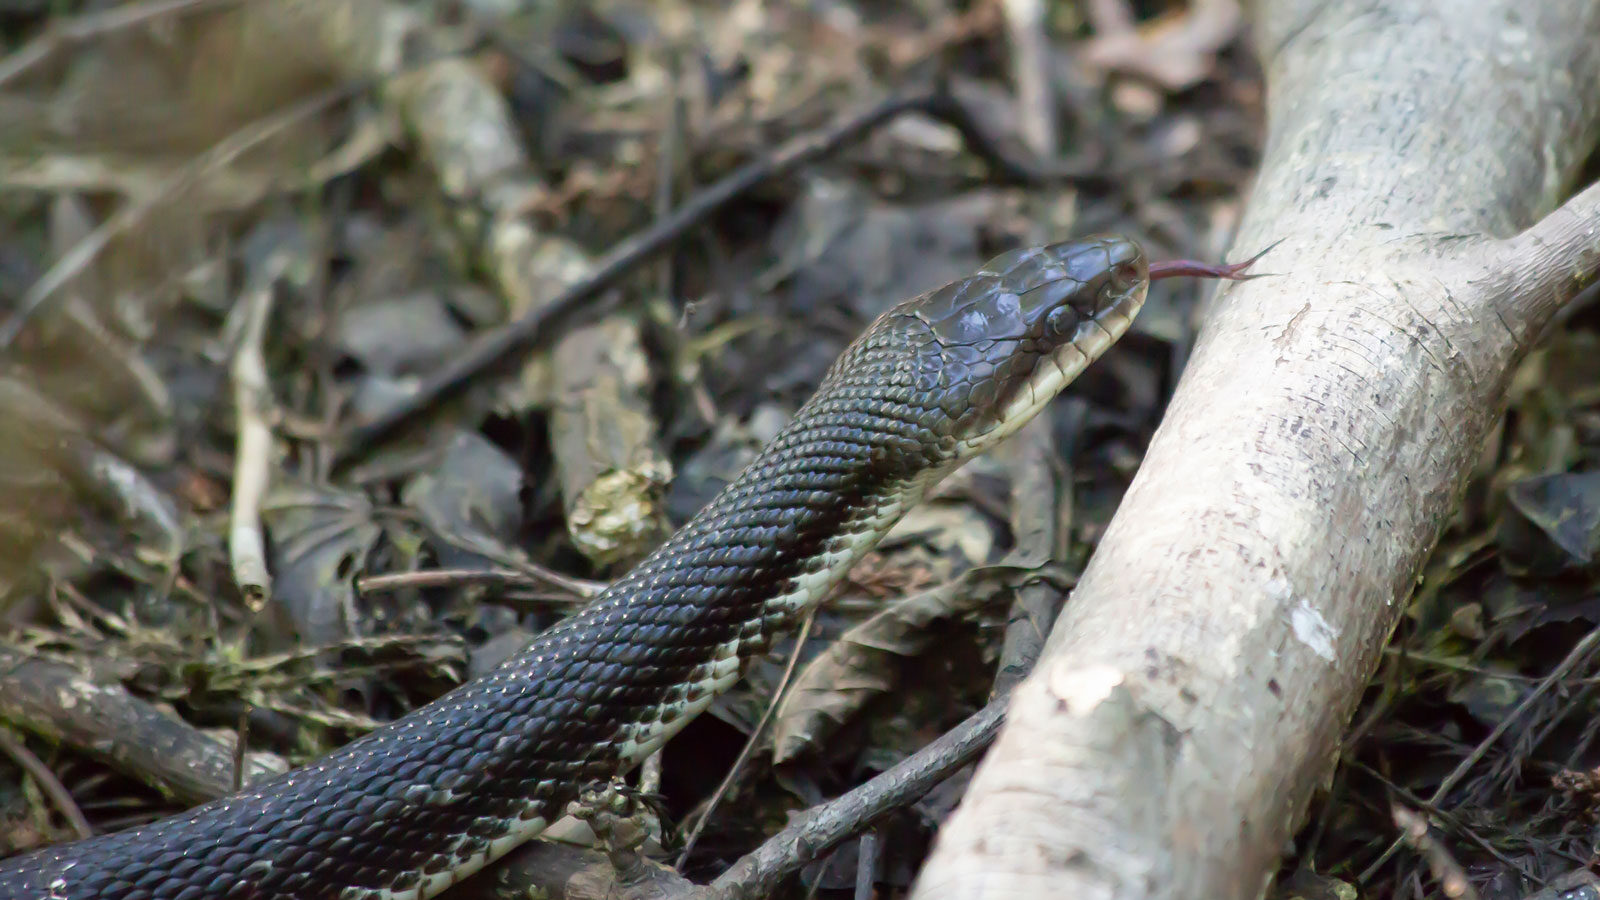 Black western rat snake (chicken snake) crawling over a limb